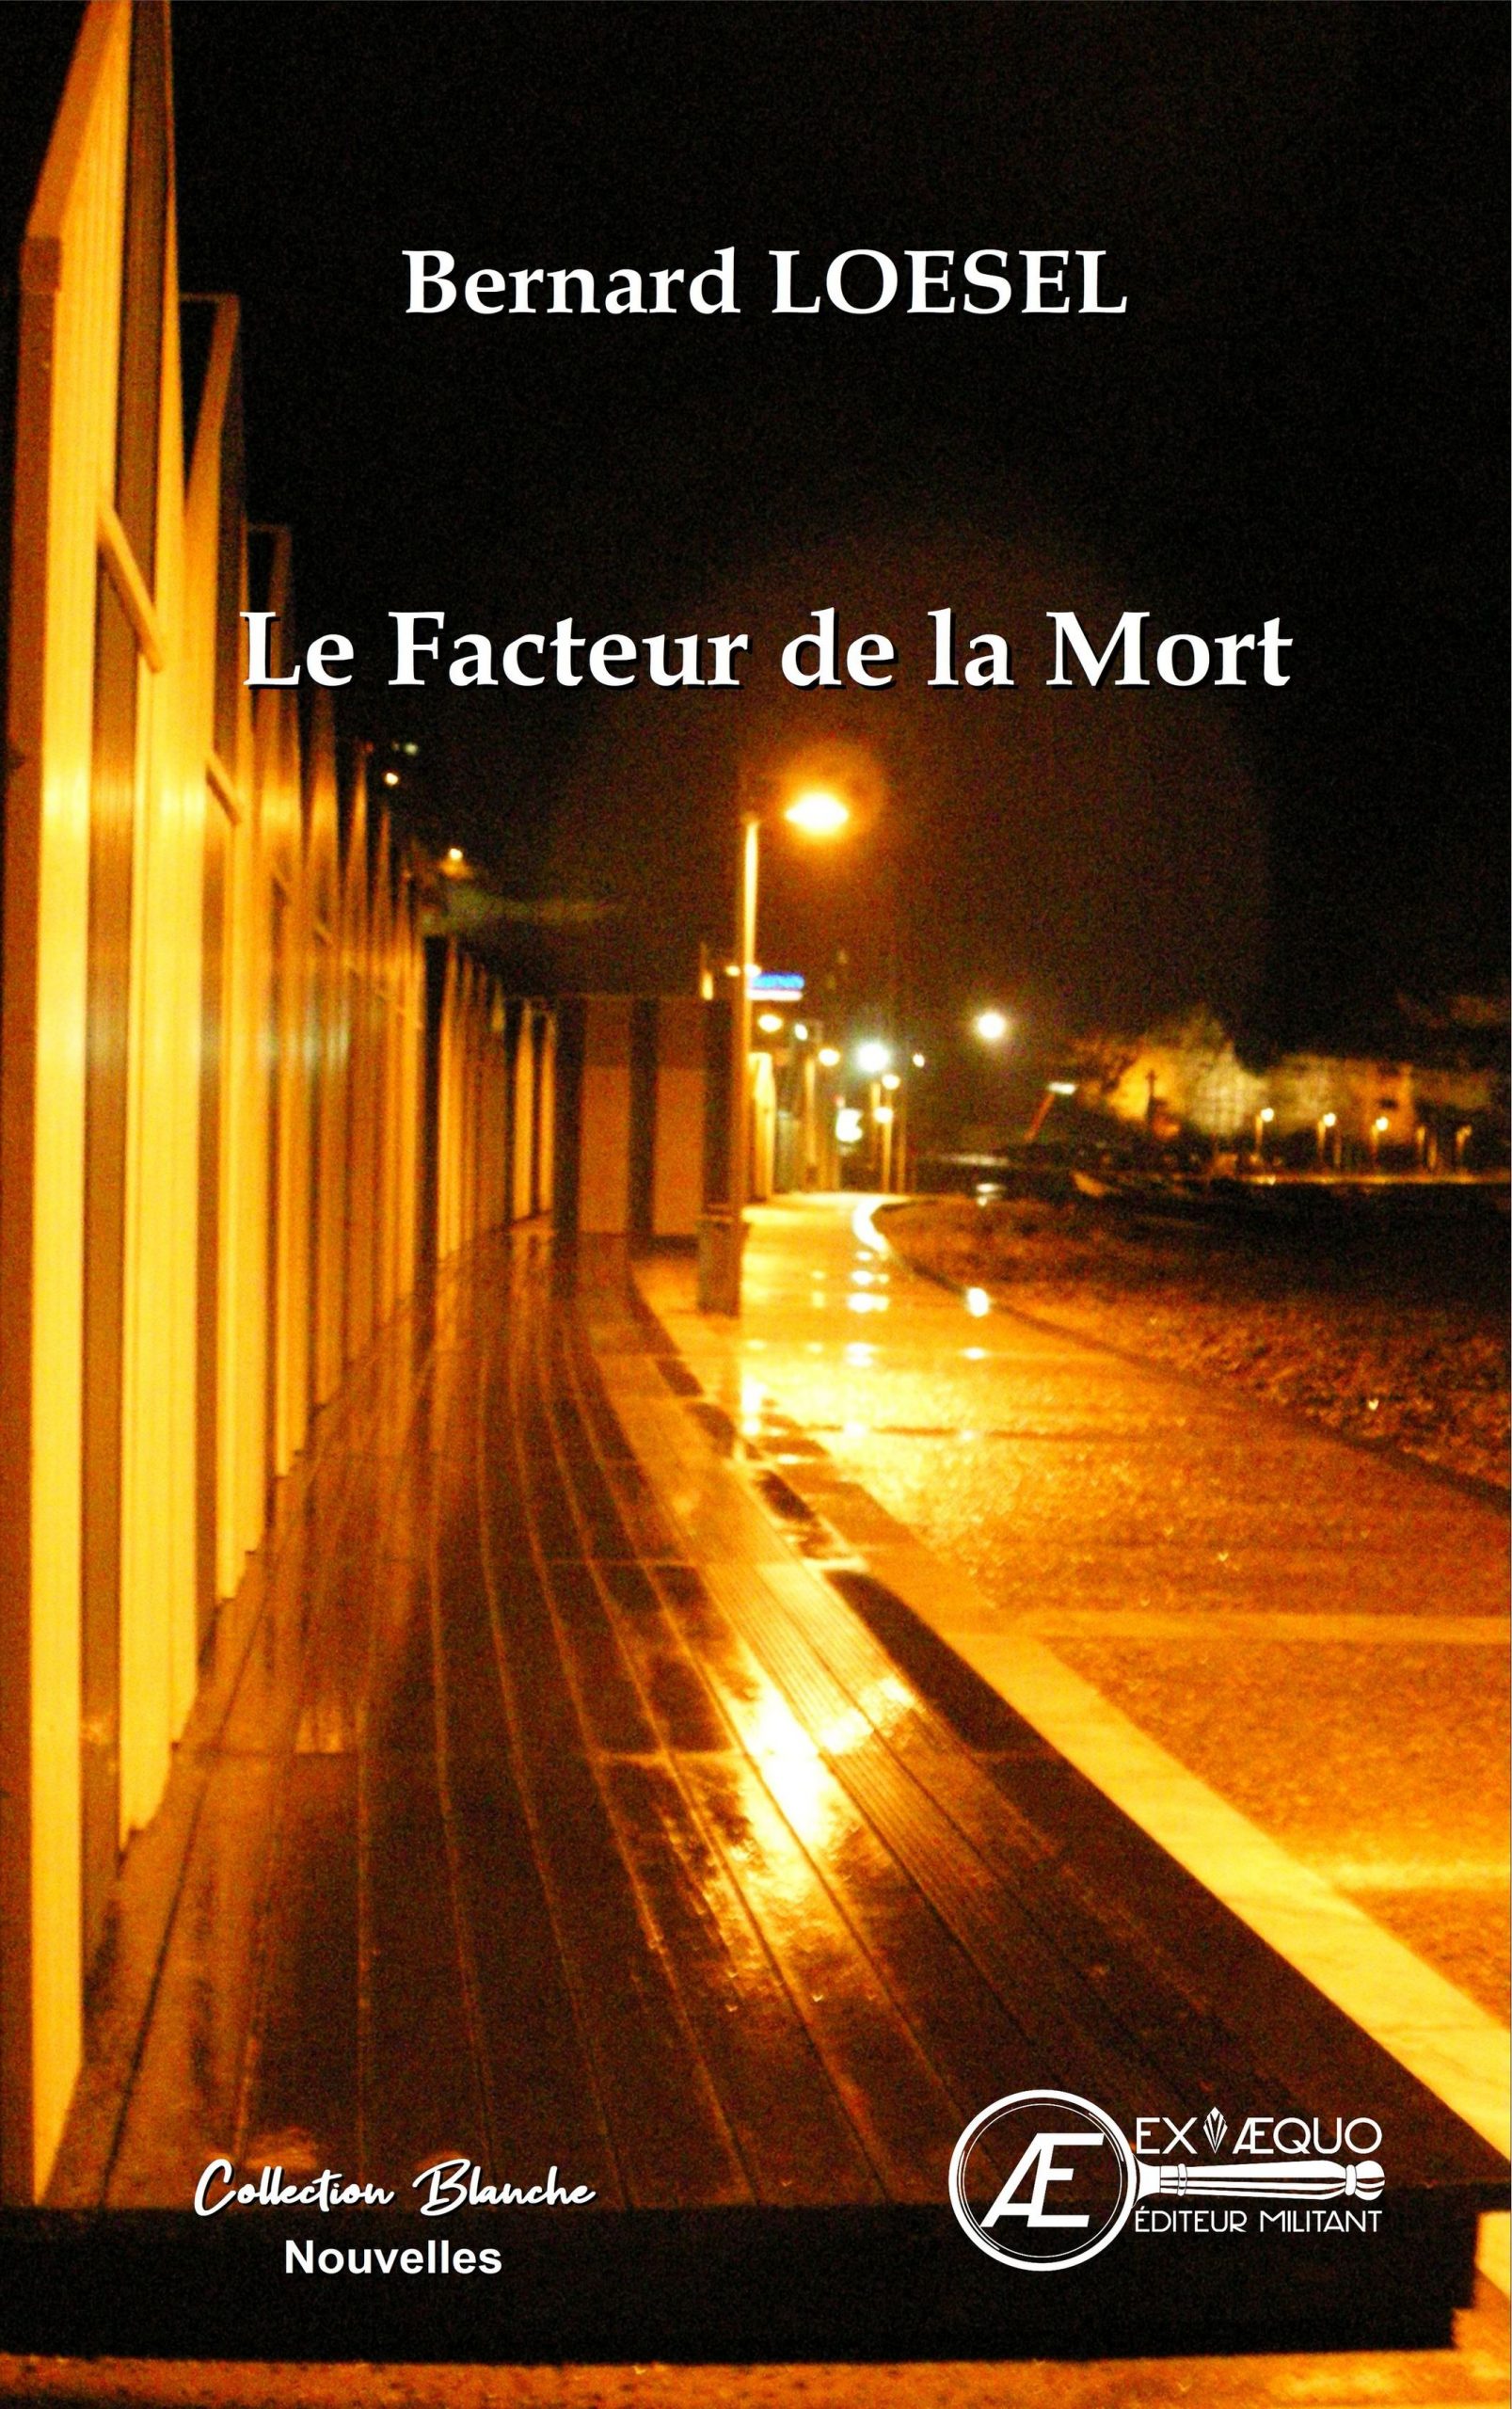 You are currently viewing Le facteur de la mort, de Bernard Loesel